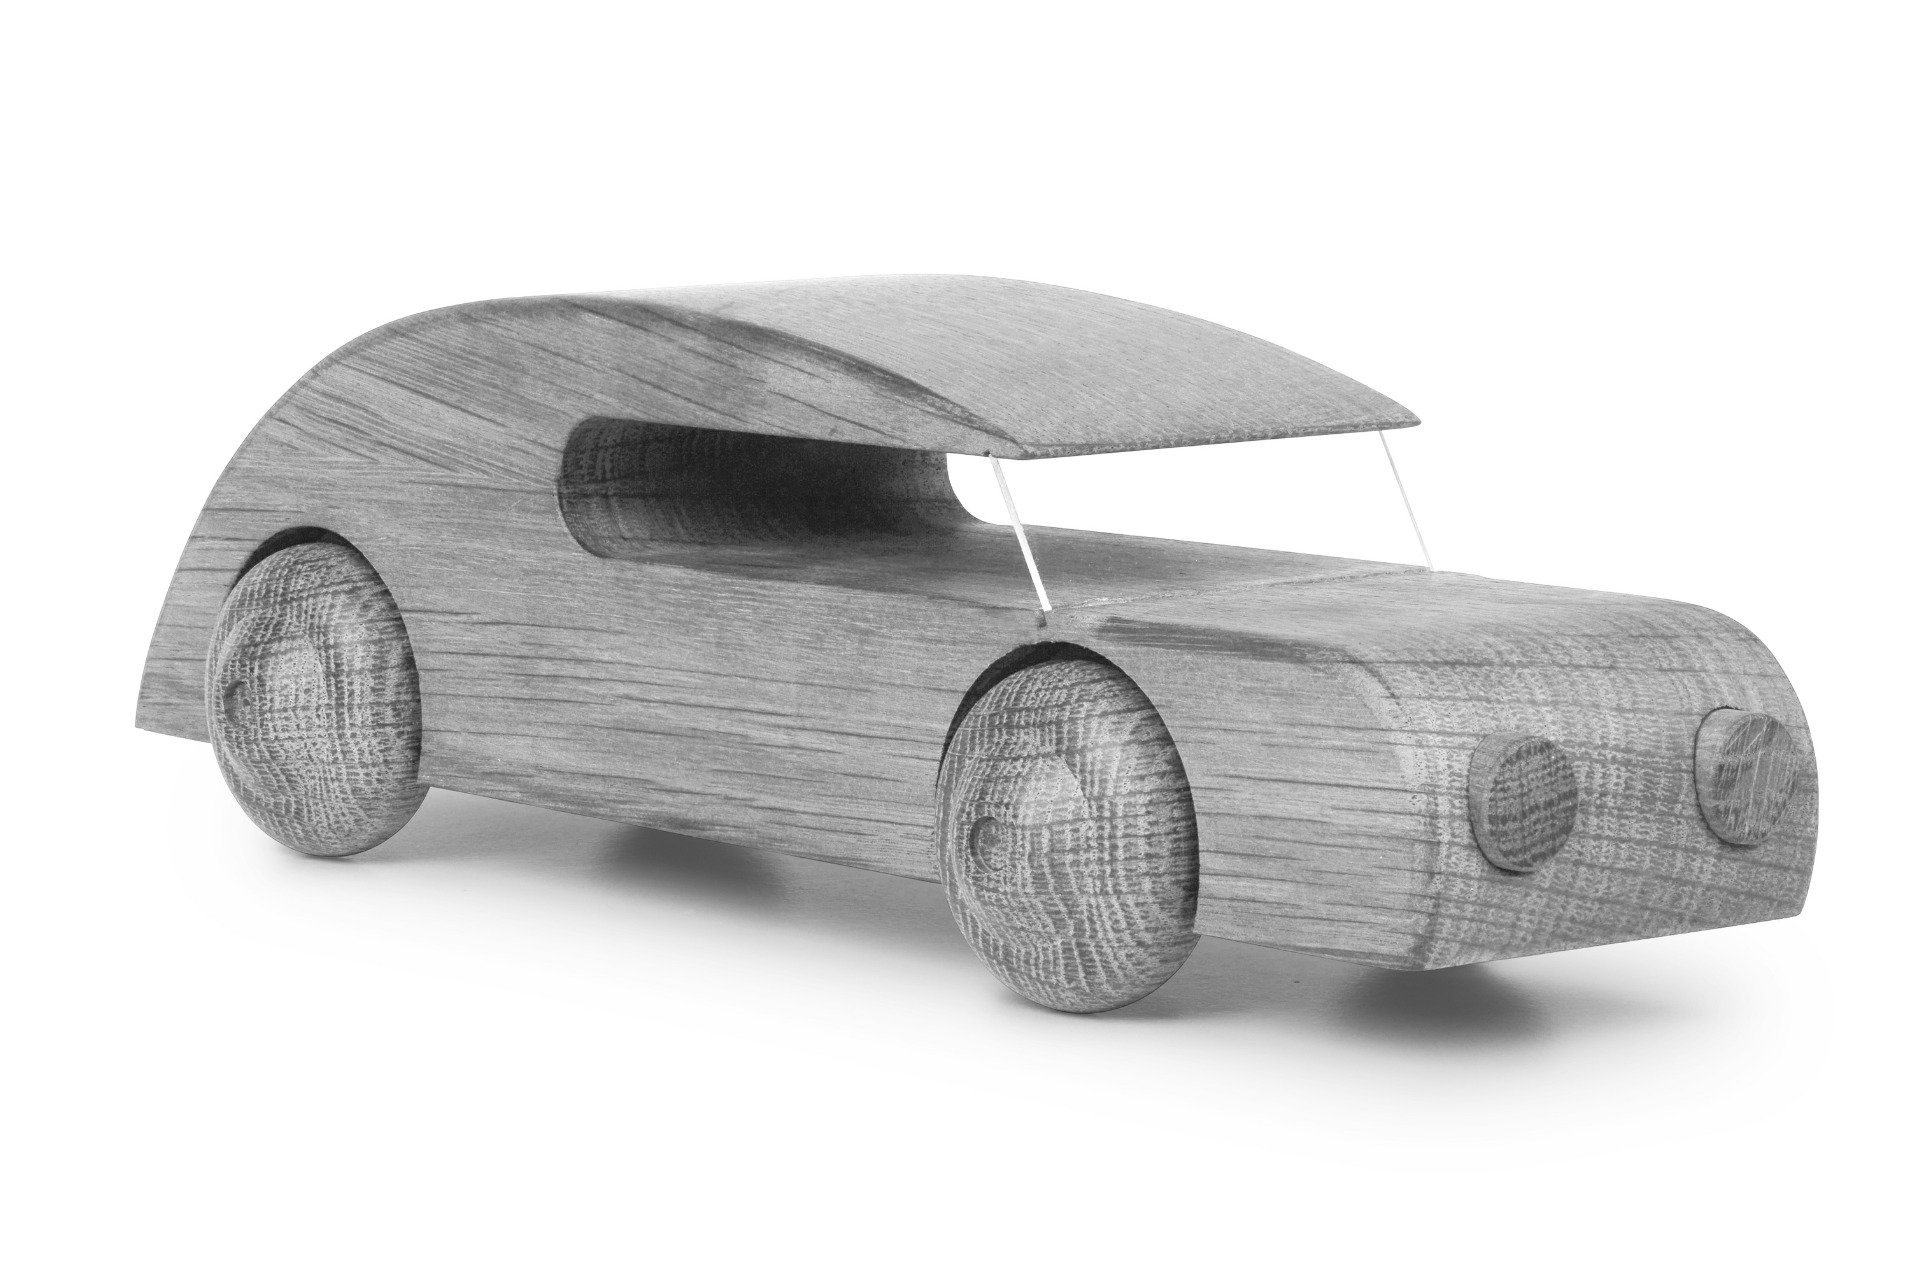 The car, design by Kay Bojesen